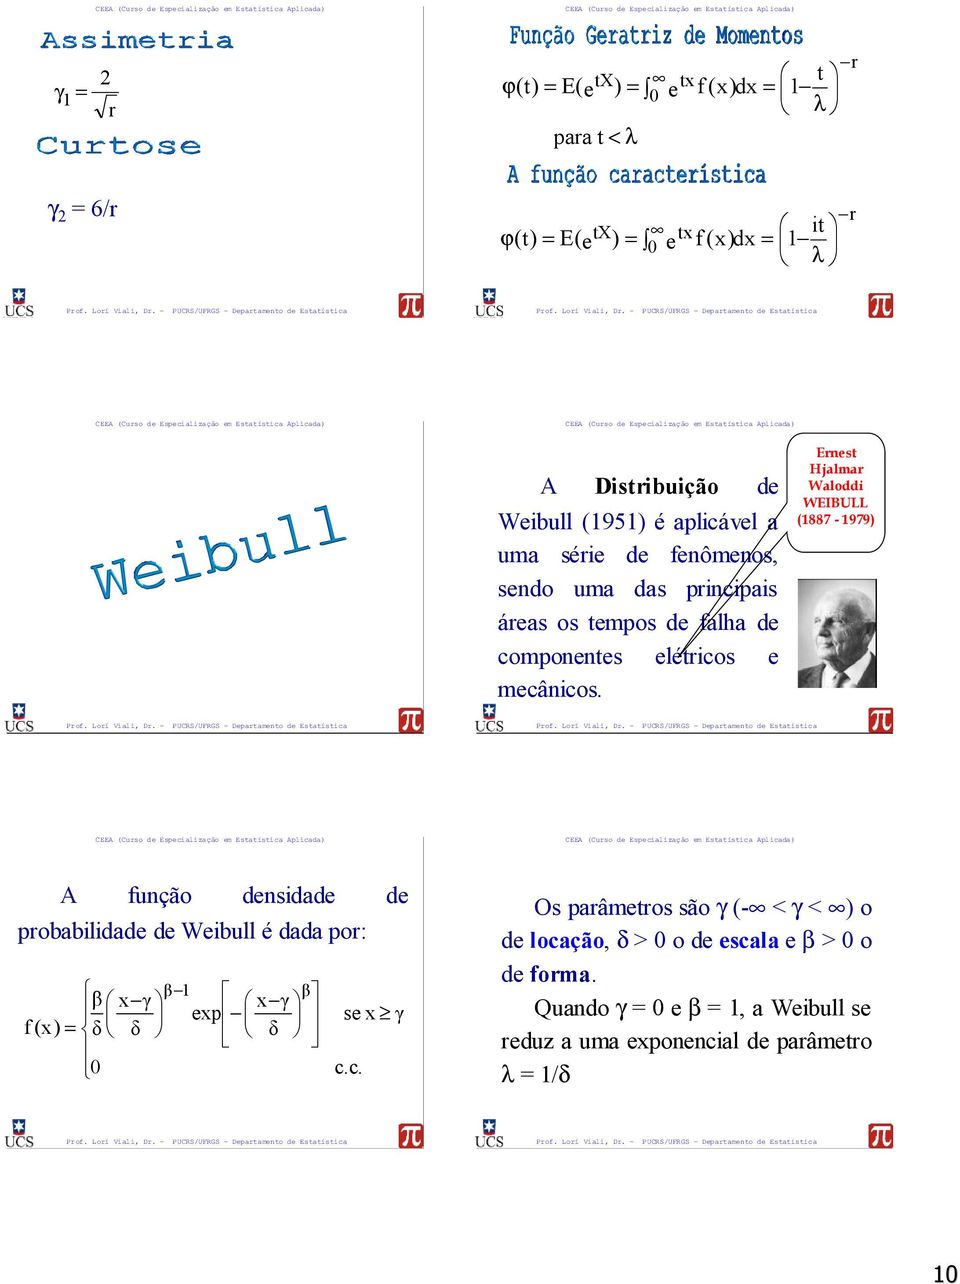 Erns Hjlmr Wloddi WEIBULL (887-979) A função dnsidd d probbilidd d Wibull é dd por: β β β xγ xγ xp f (x)